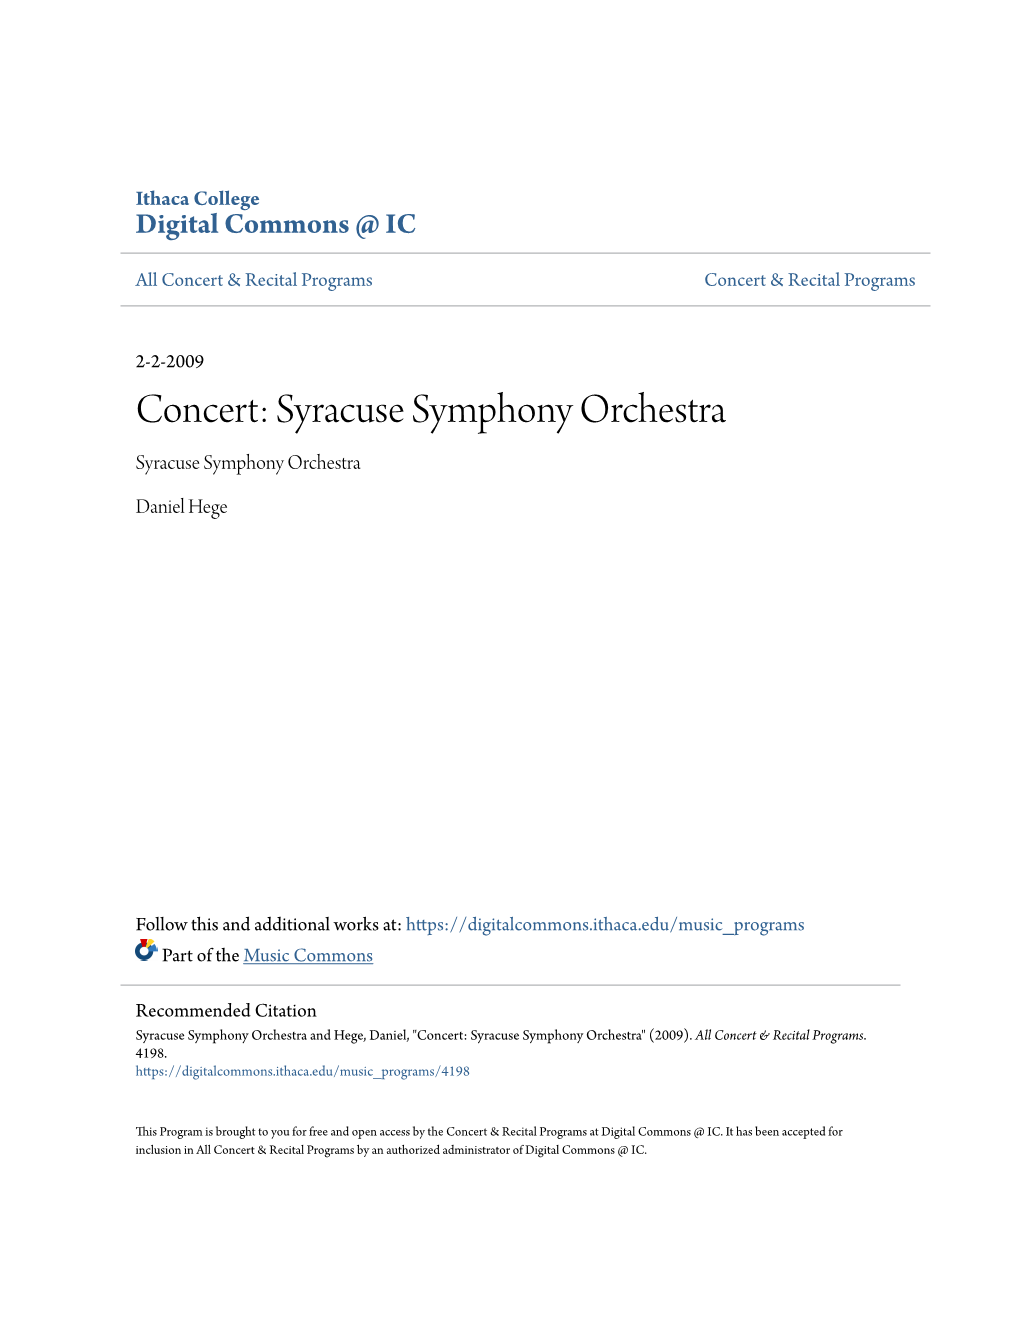 Concert: Syracuse Symphony Orchestra Syracuse Symphony Orchestra